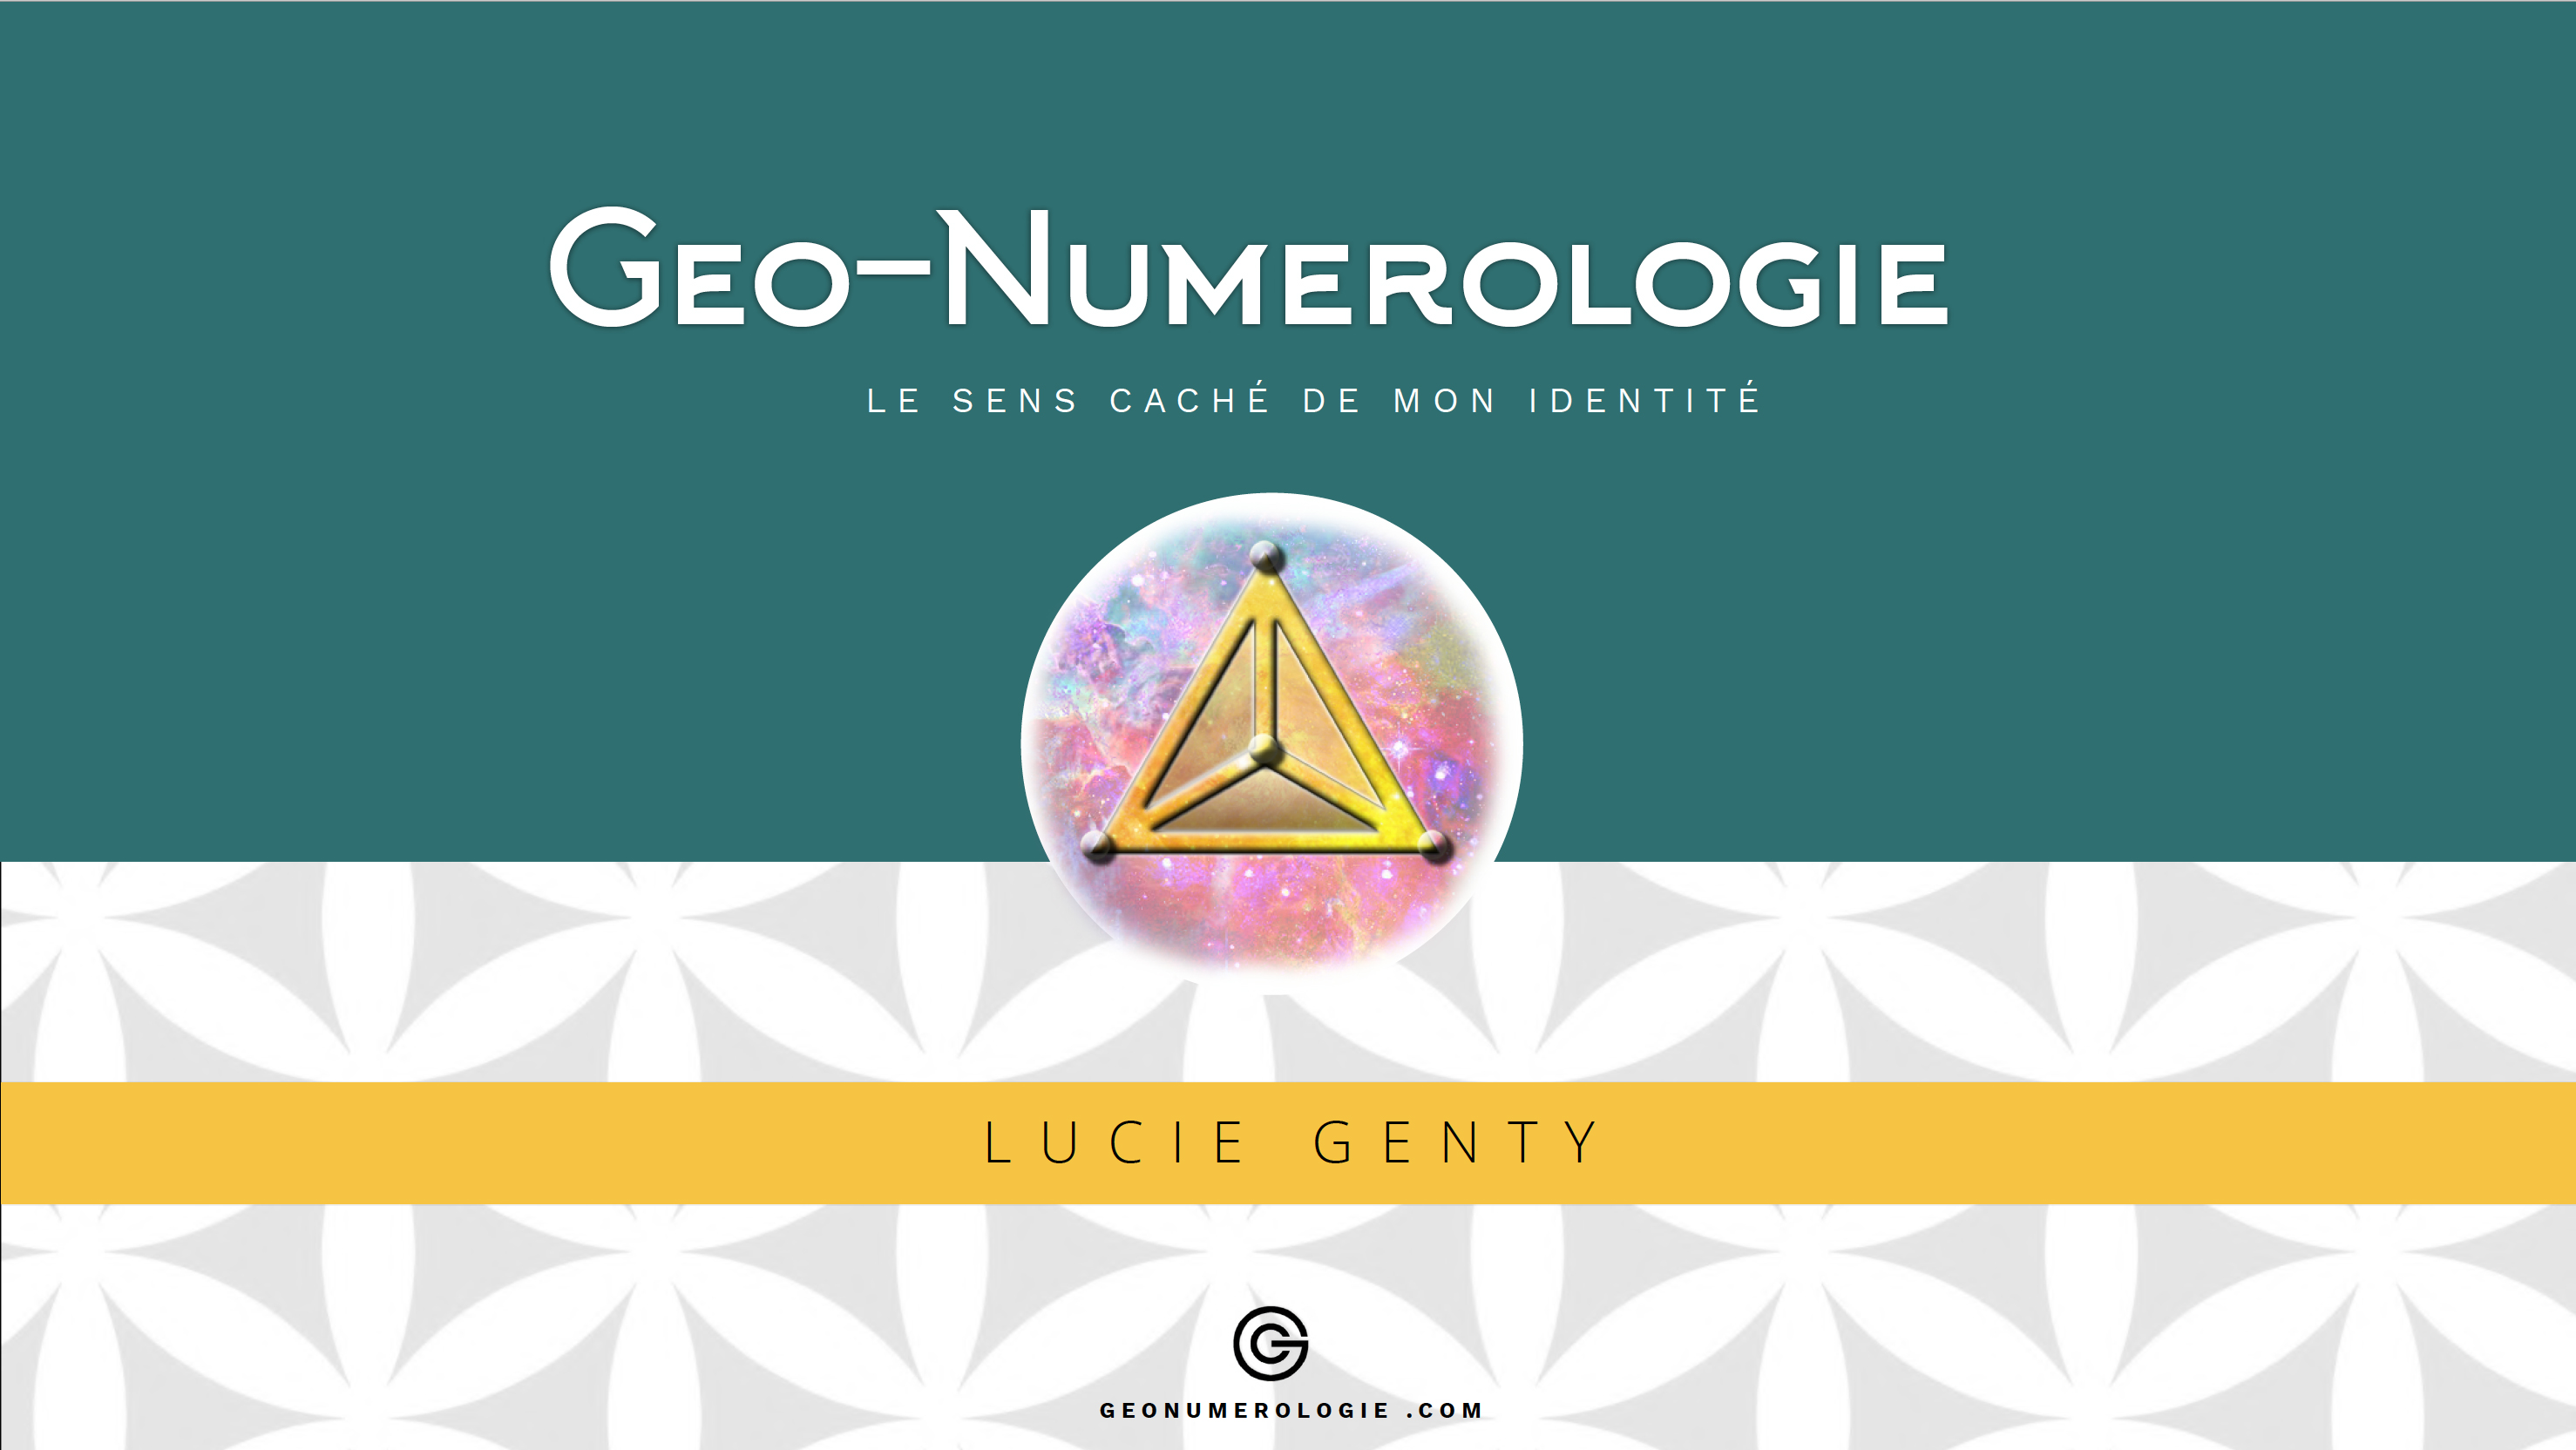 Geonumerologie